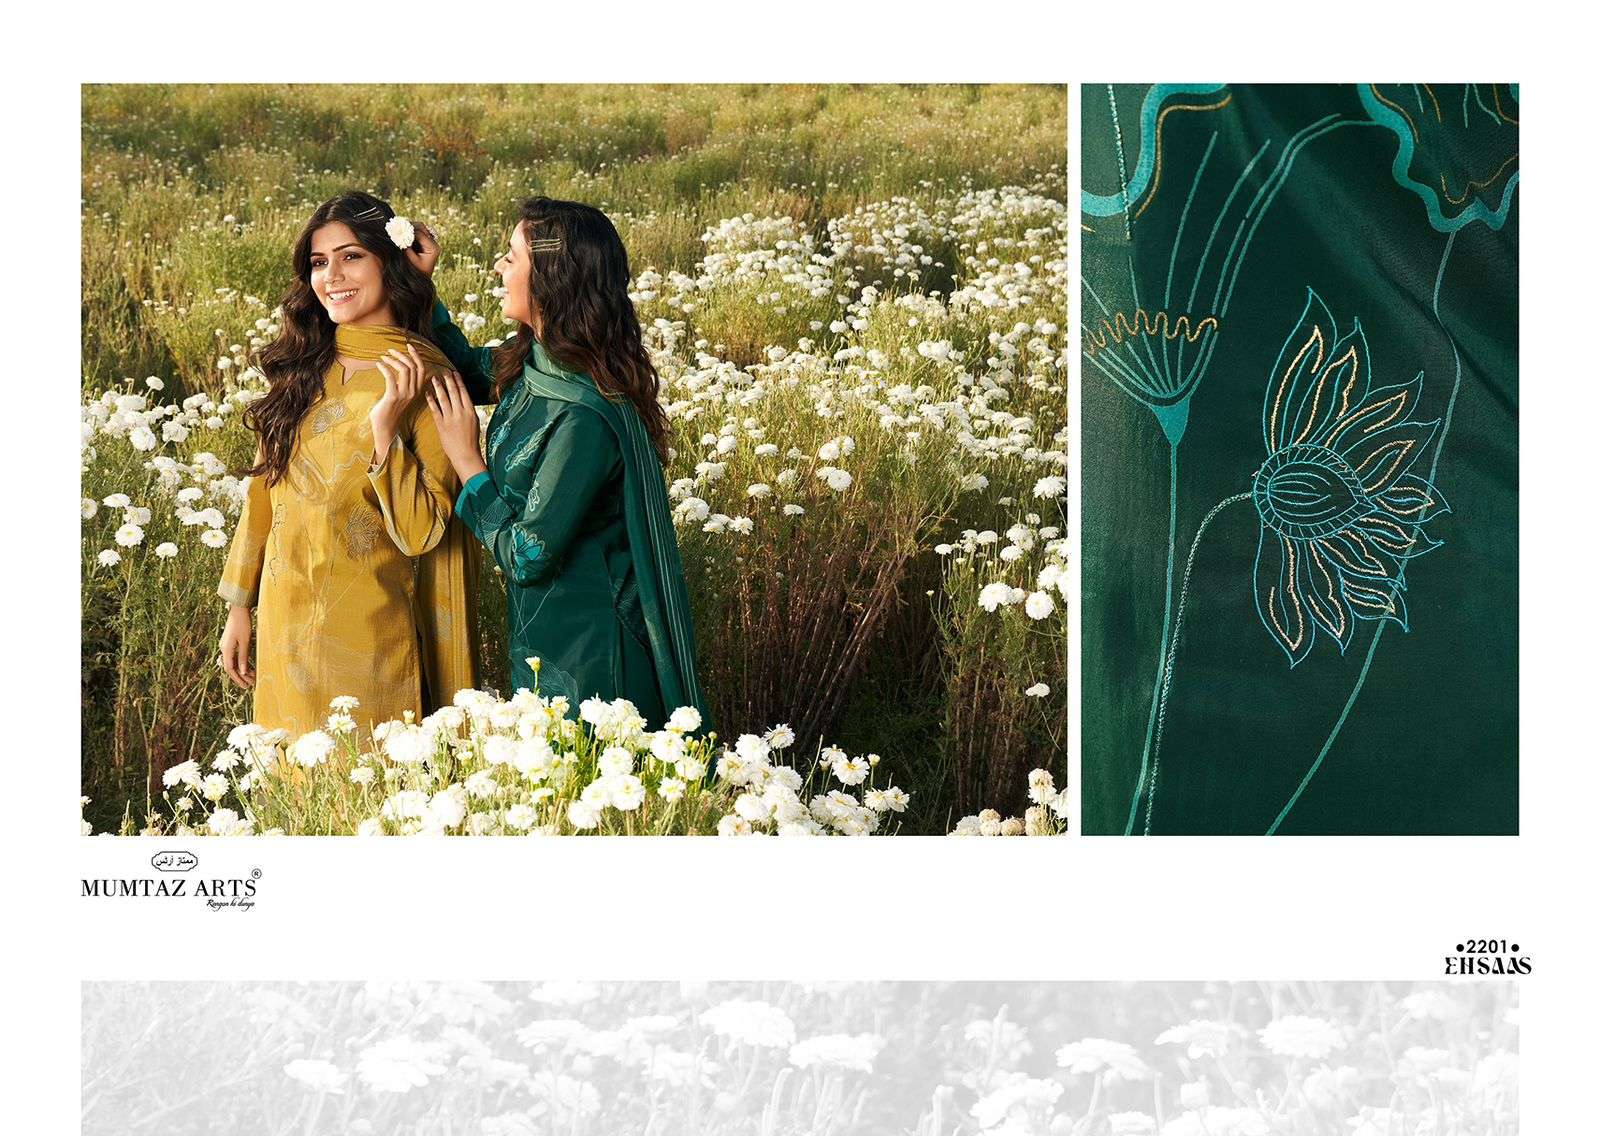 mumtaz arts ehsaas viscose muslin regal look salwar suit catalog